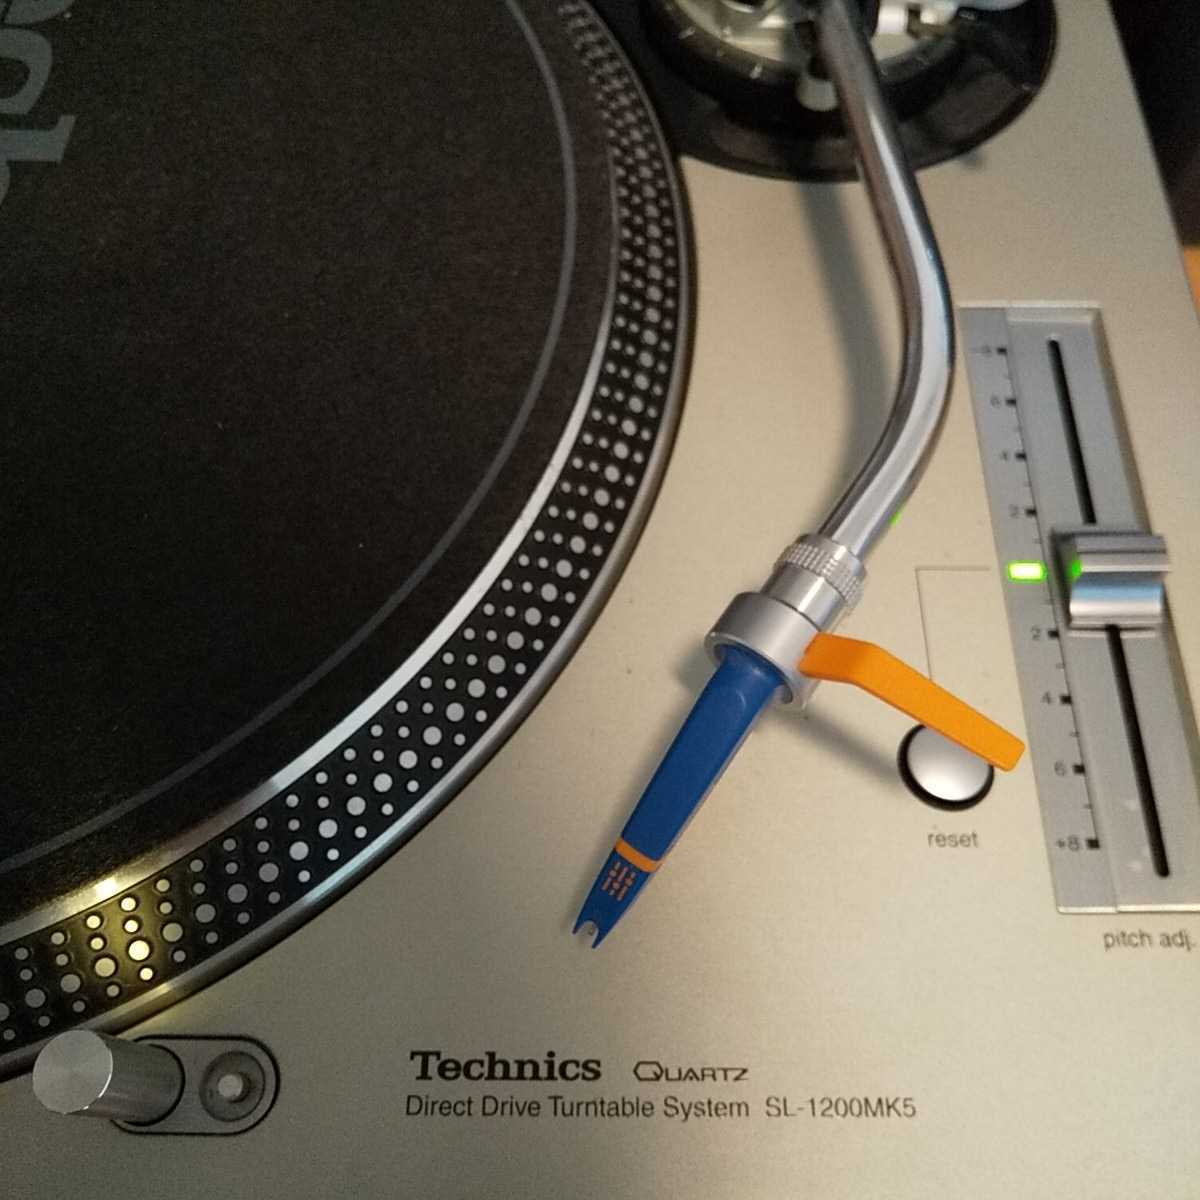 DJセット Technics SL-1200MK5 ortofon Pioneer DJ テクニクス ターン 